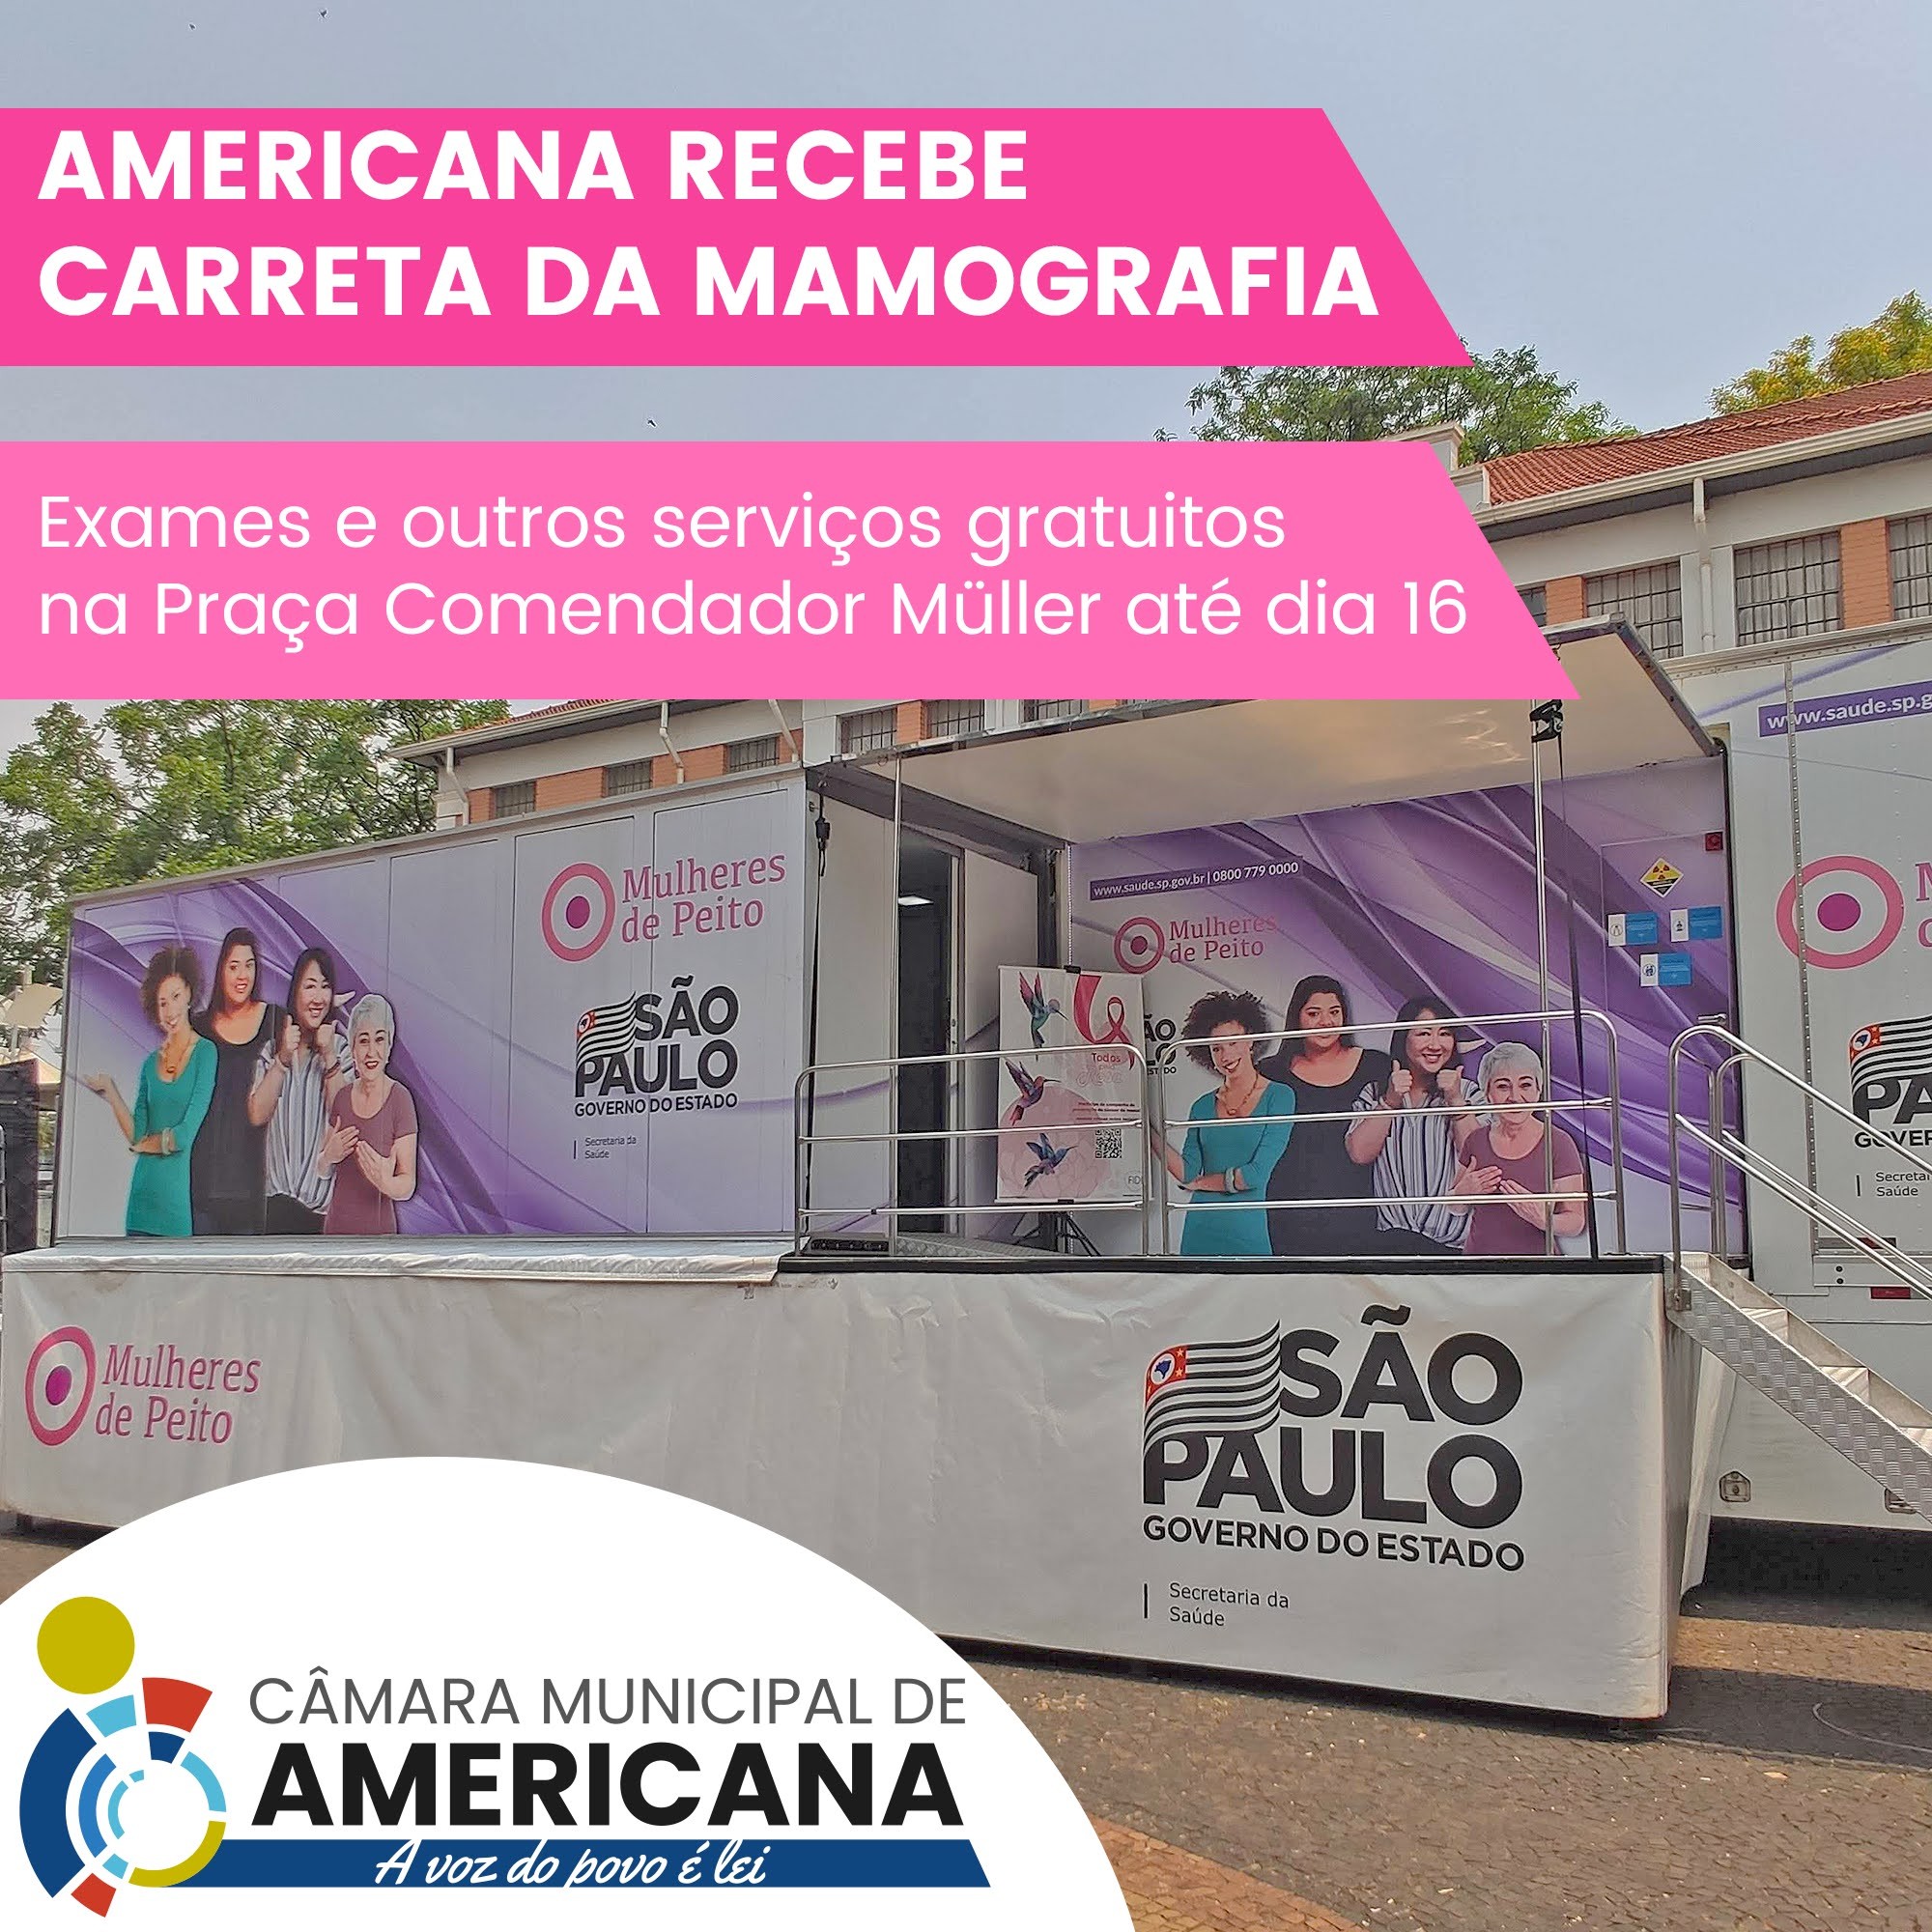 Praça Comendador Muller, Americana - SP / Brazil